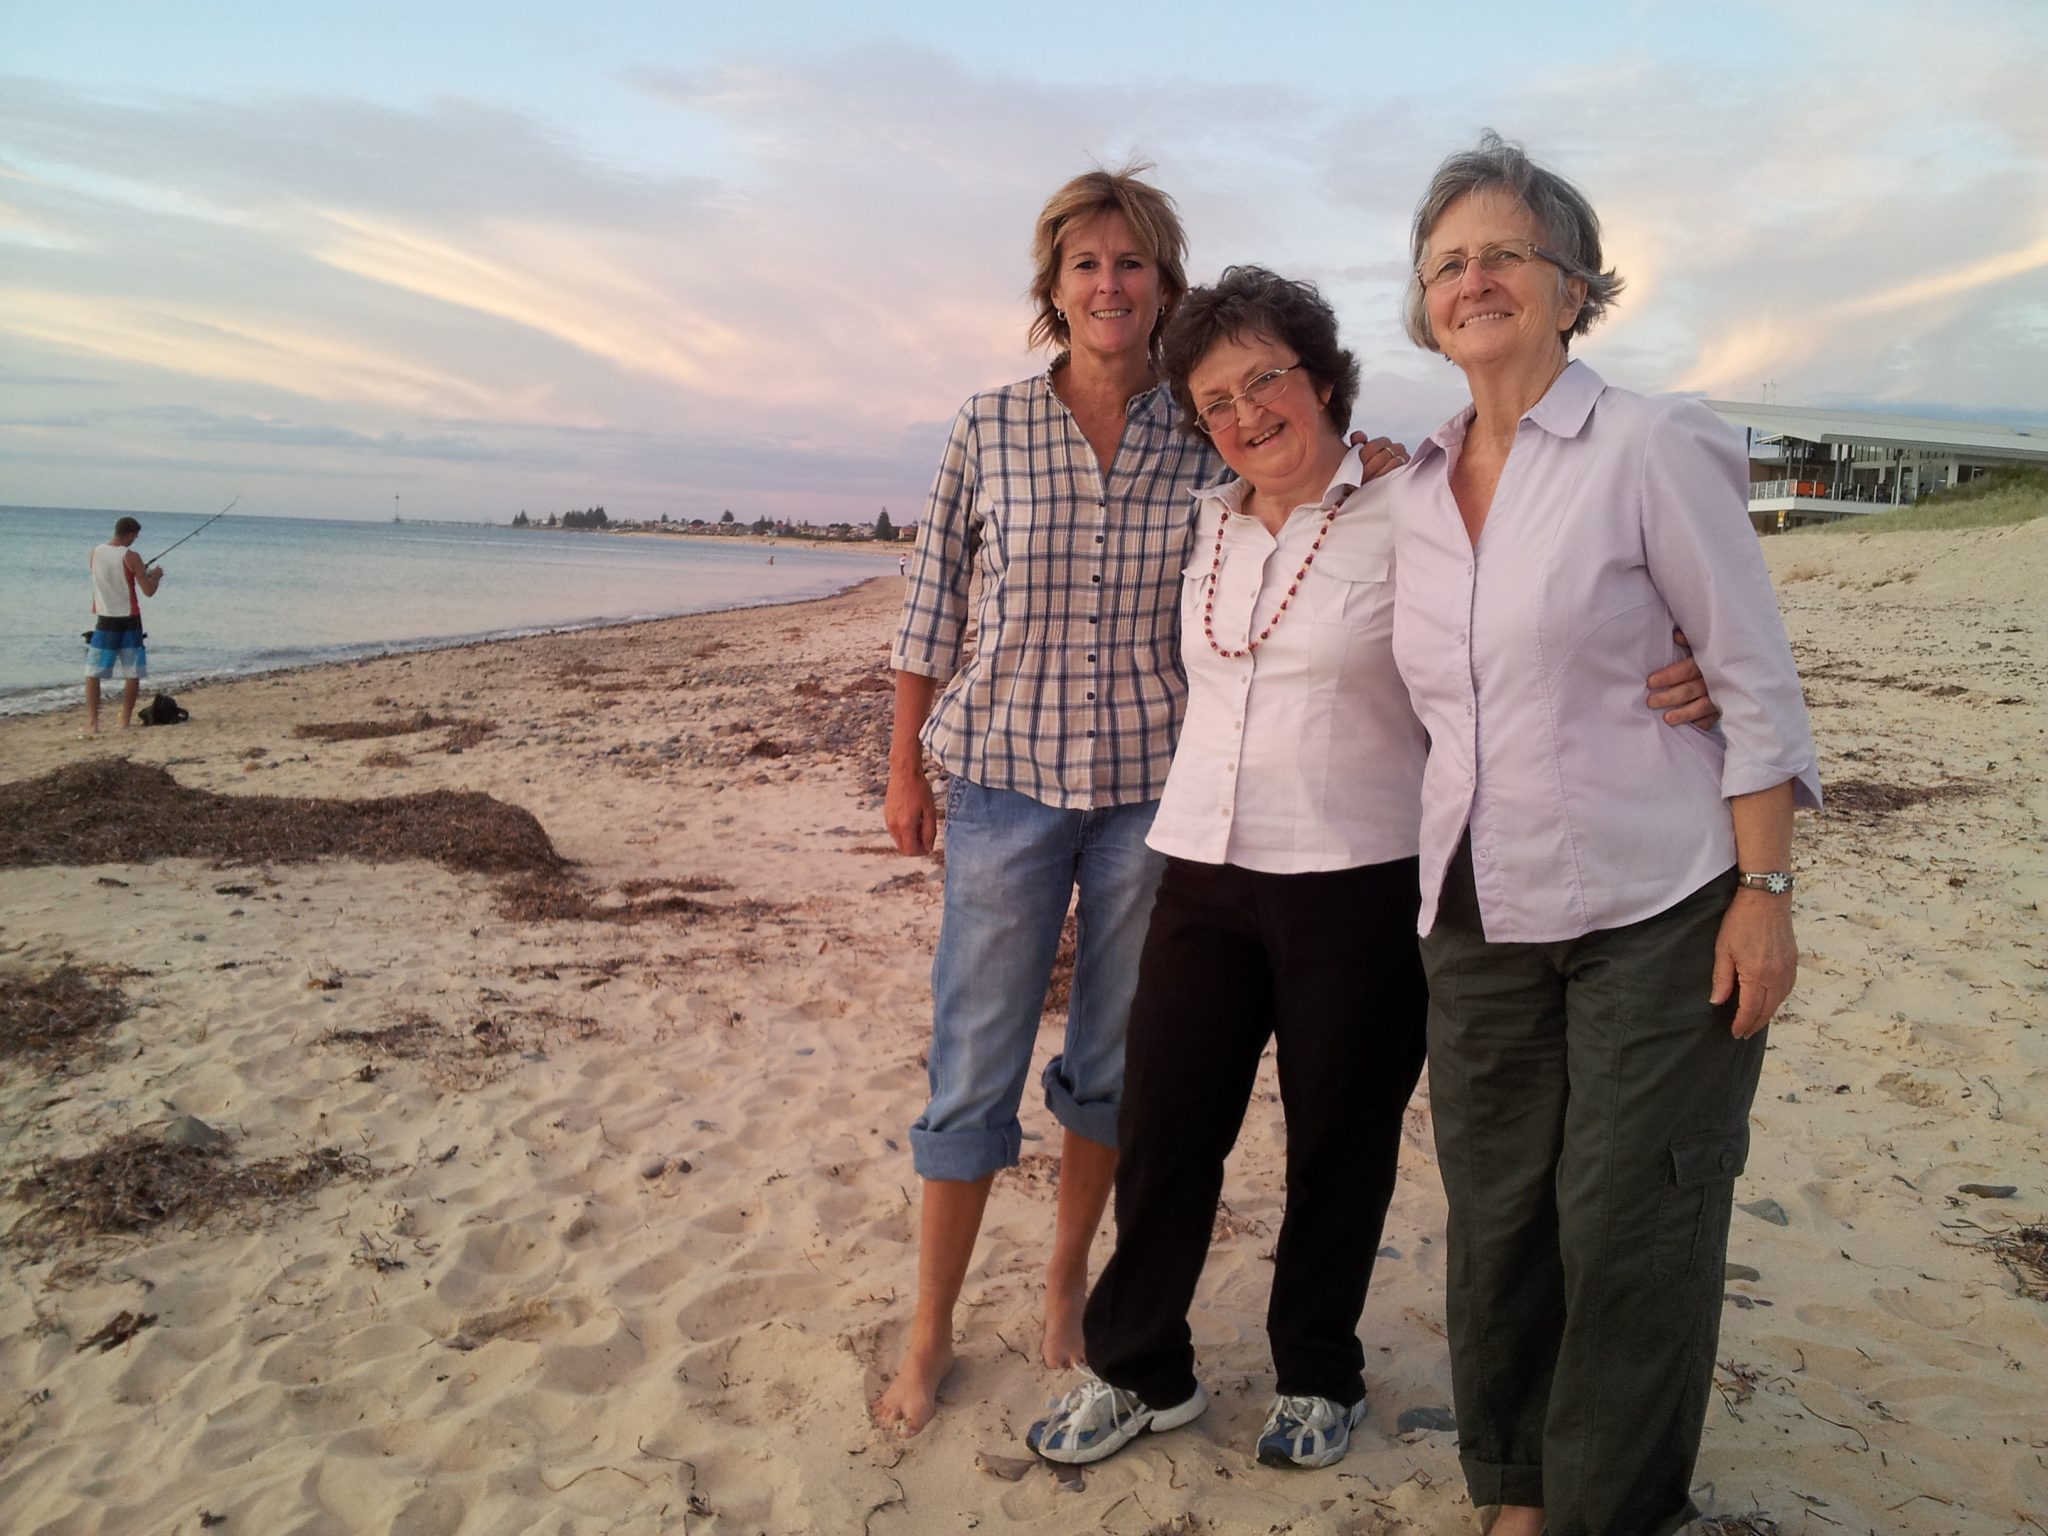 Beach sunset, 3 women standing on the sand